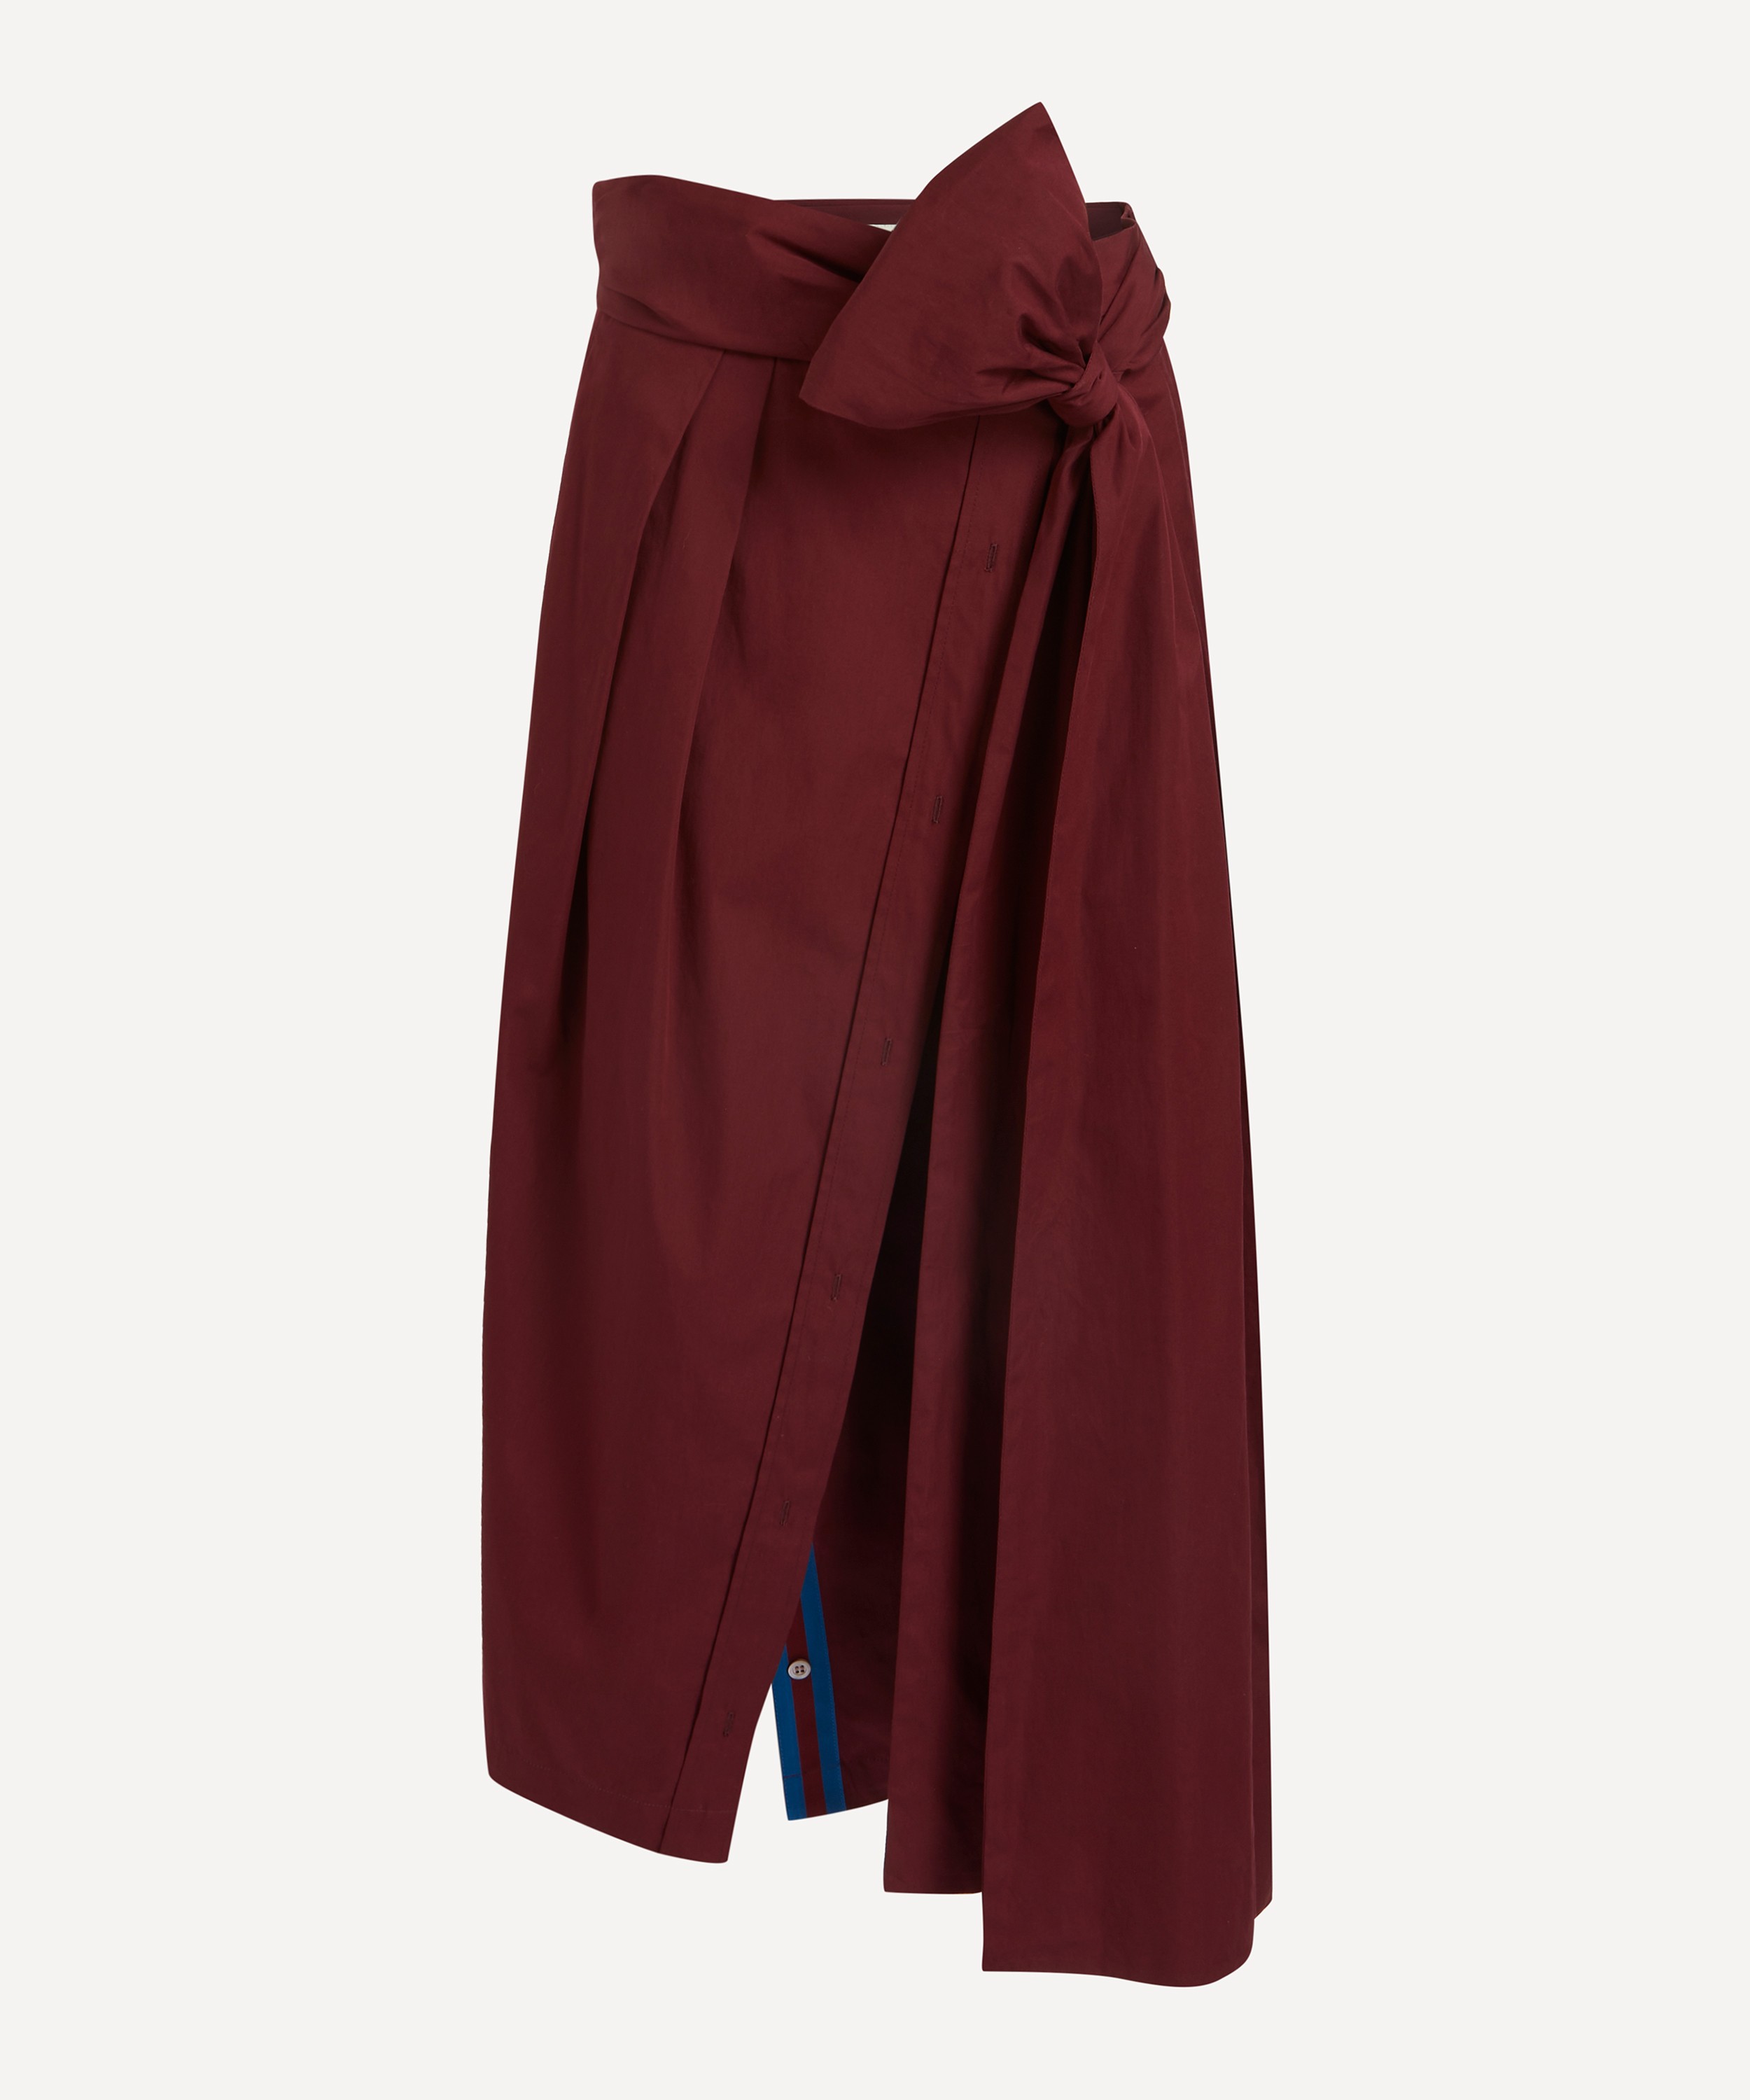 Dries Van Noten - Cotton Poplin Bow Wrap-Skirt